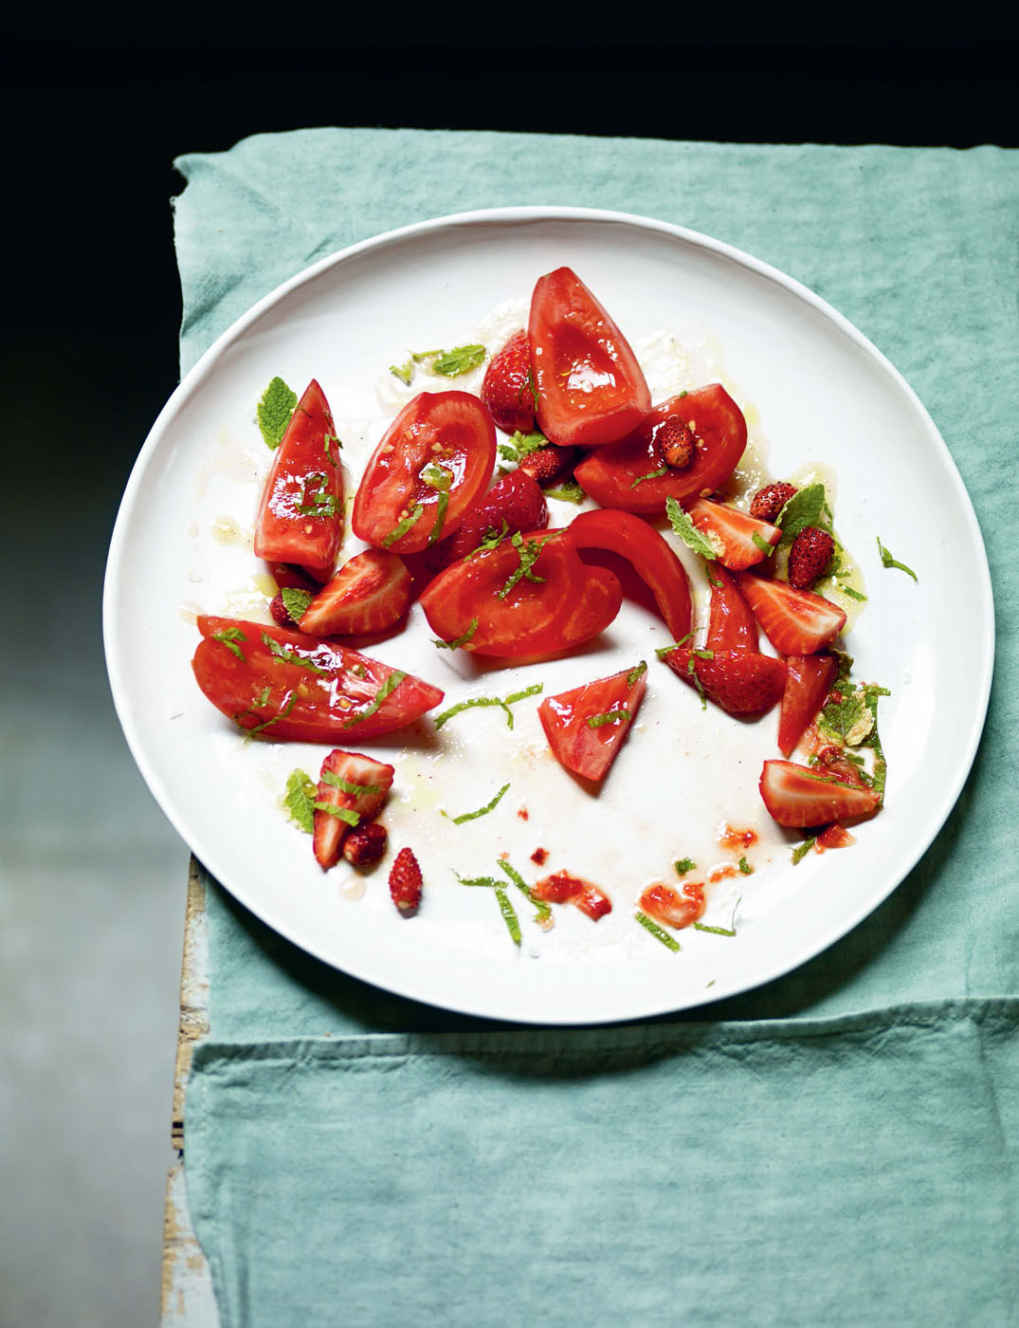 Strawberry, mint and tomato salad